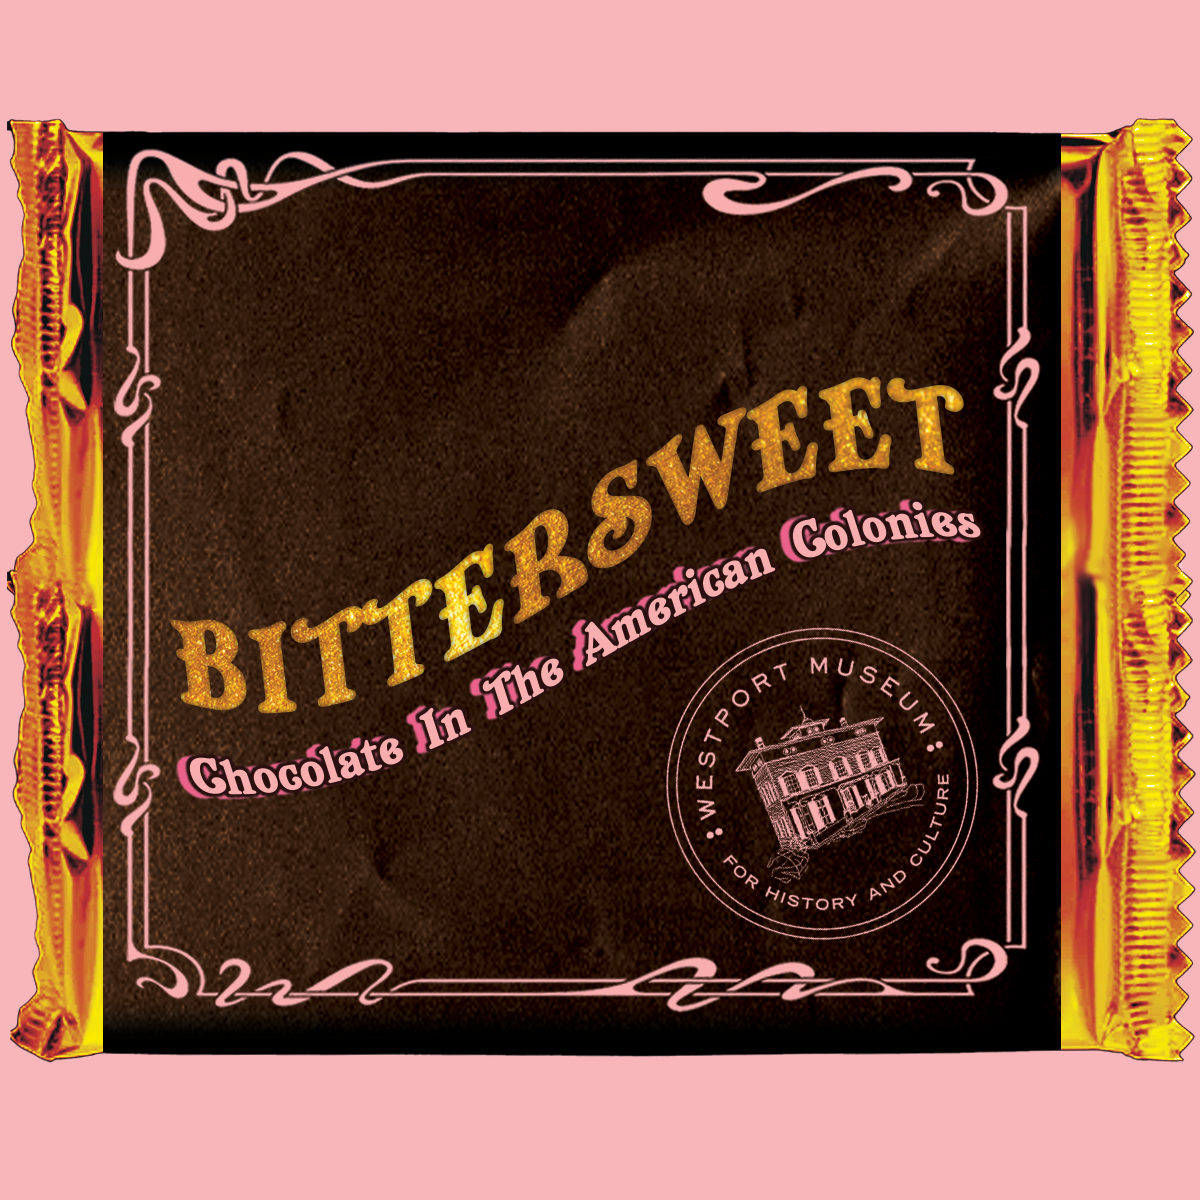 Bittersweet chocolate